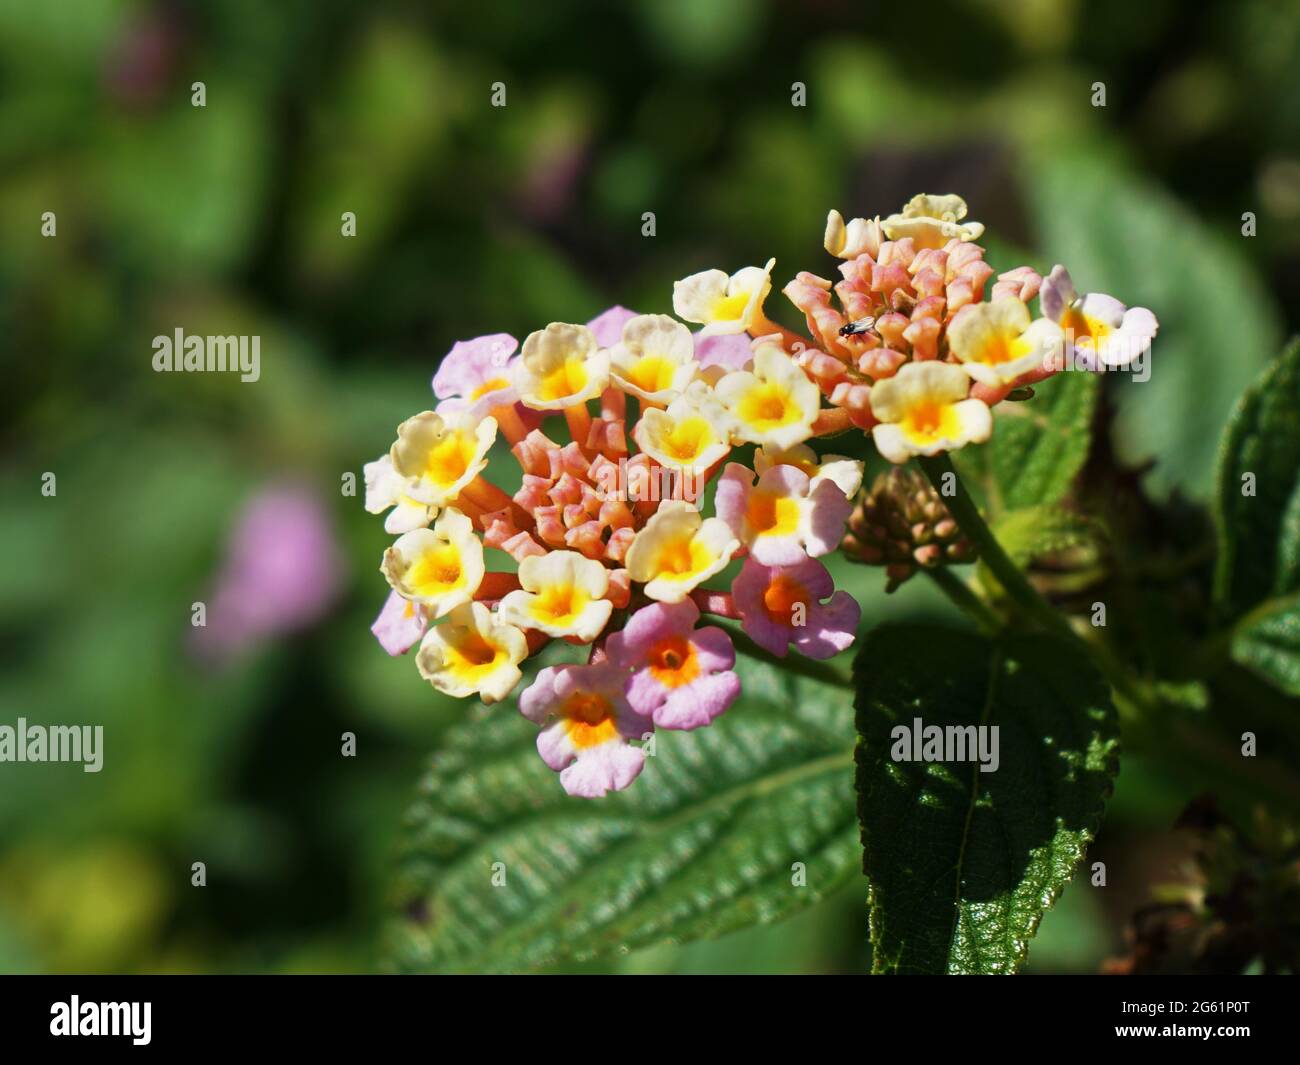 A fly alighting on beautiful lantana flowers. Stock Photo